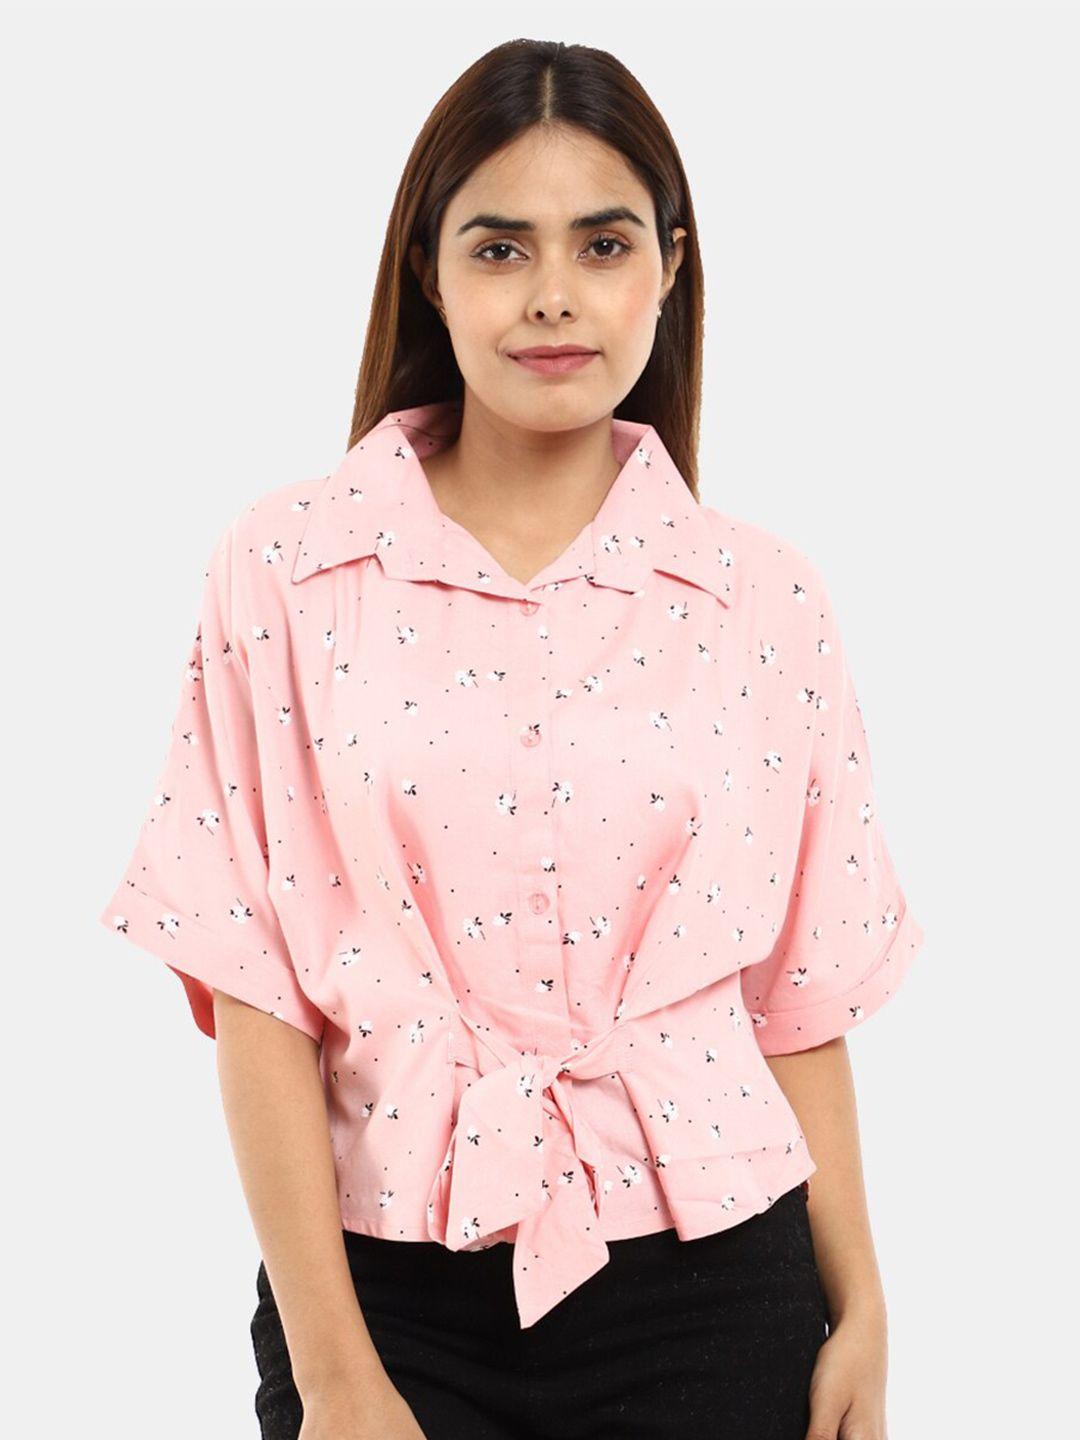 v-mart pink & black print extended sleeves chiffon shirt style top